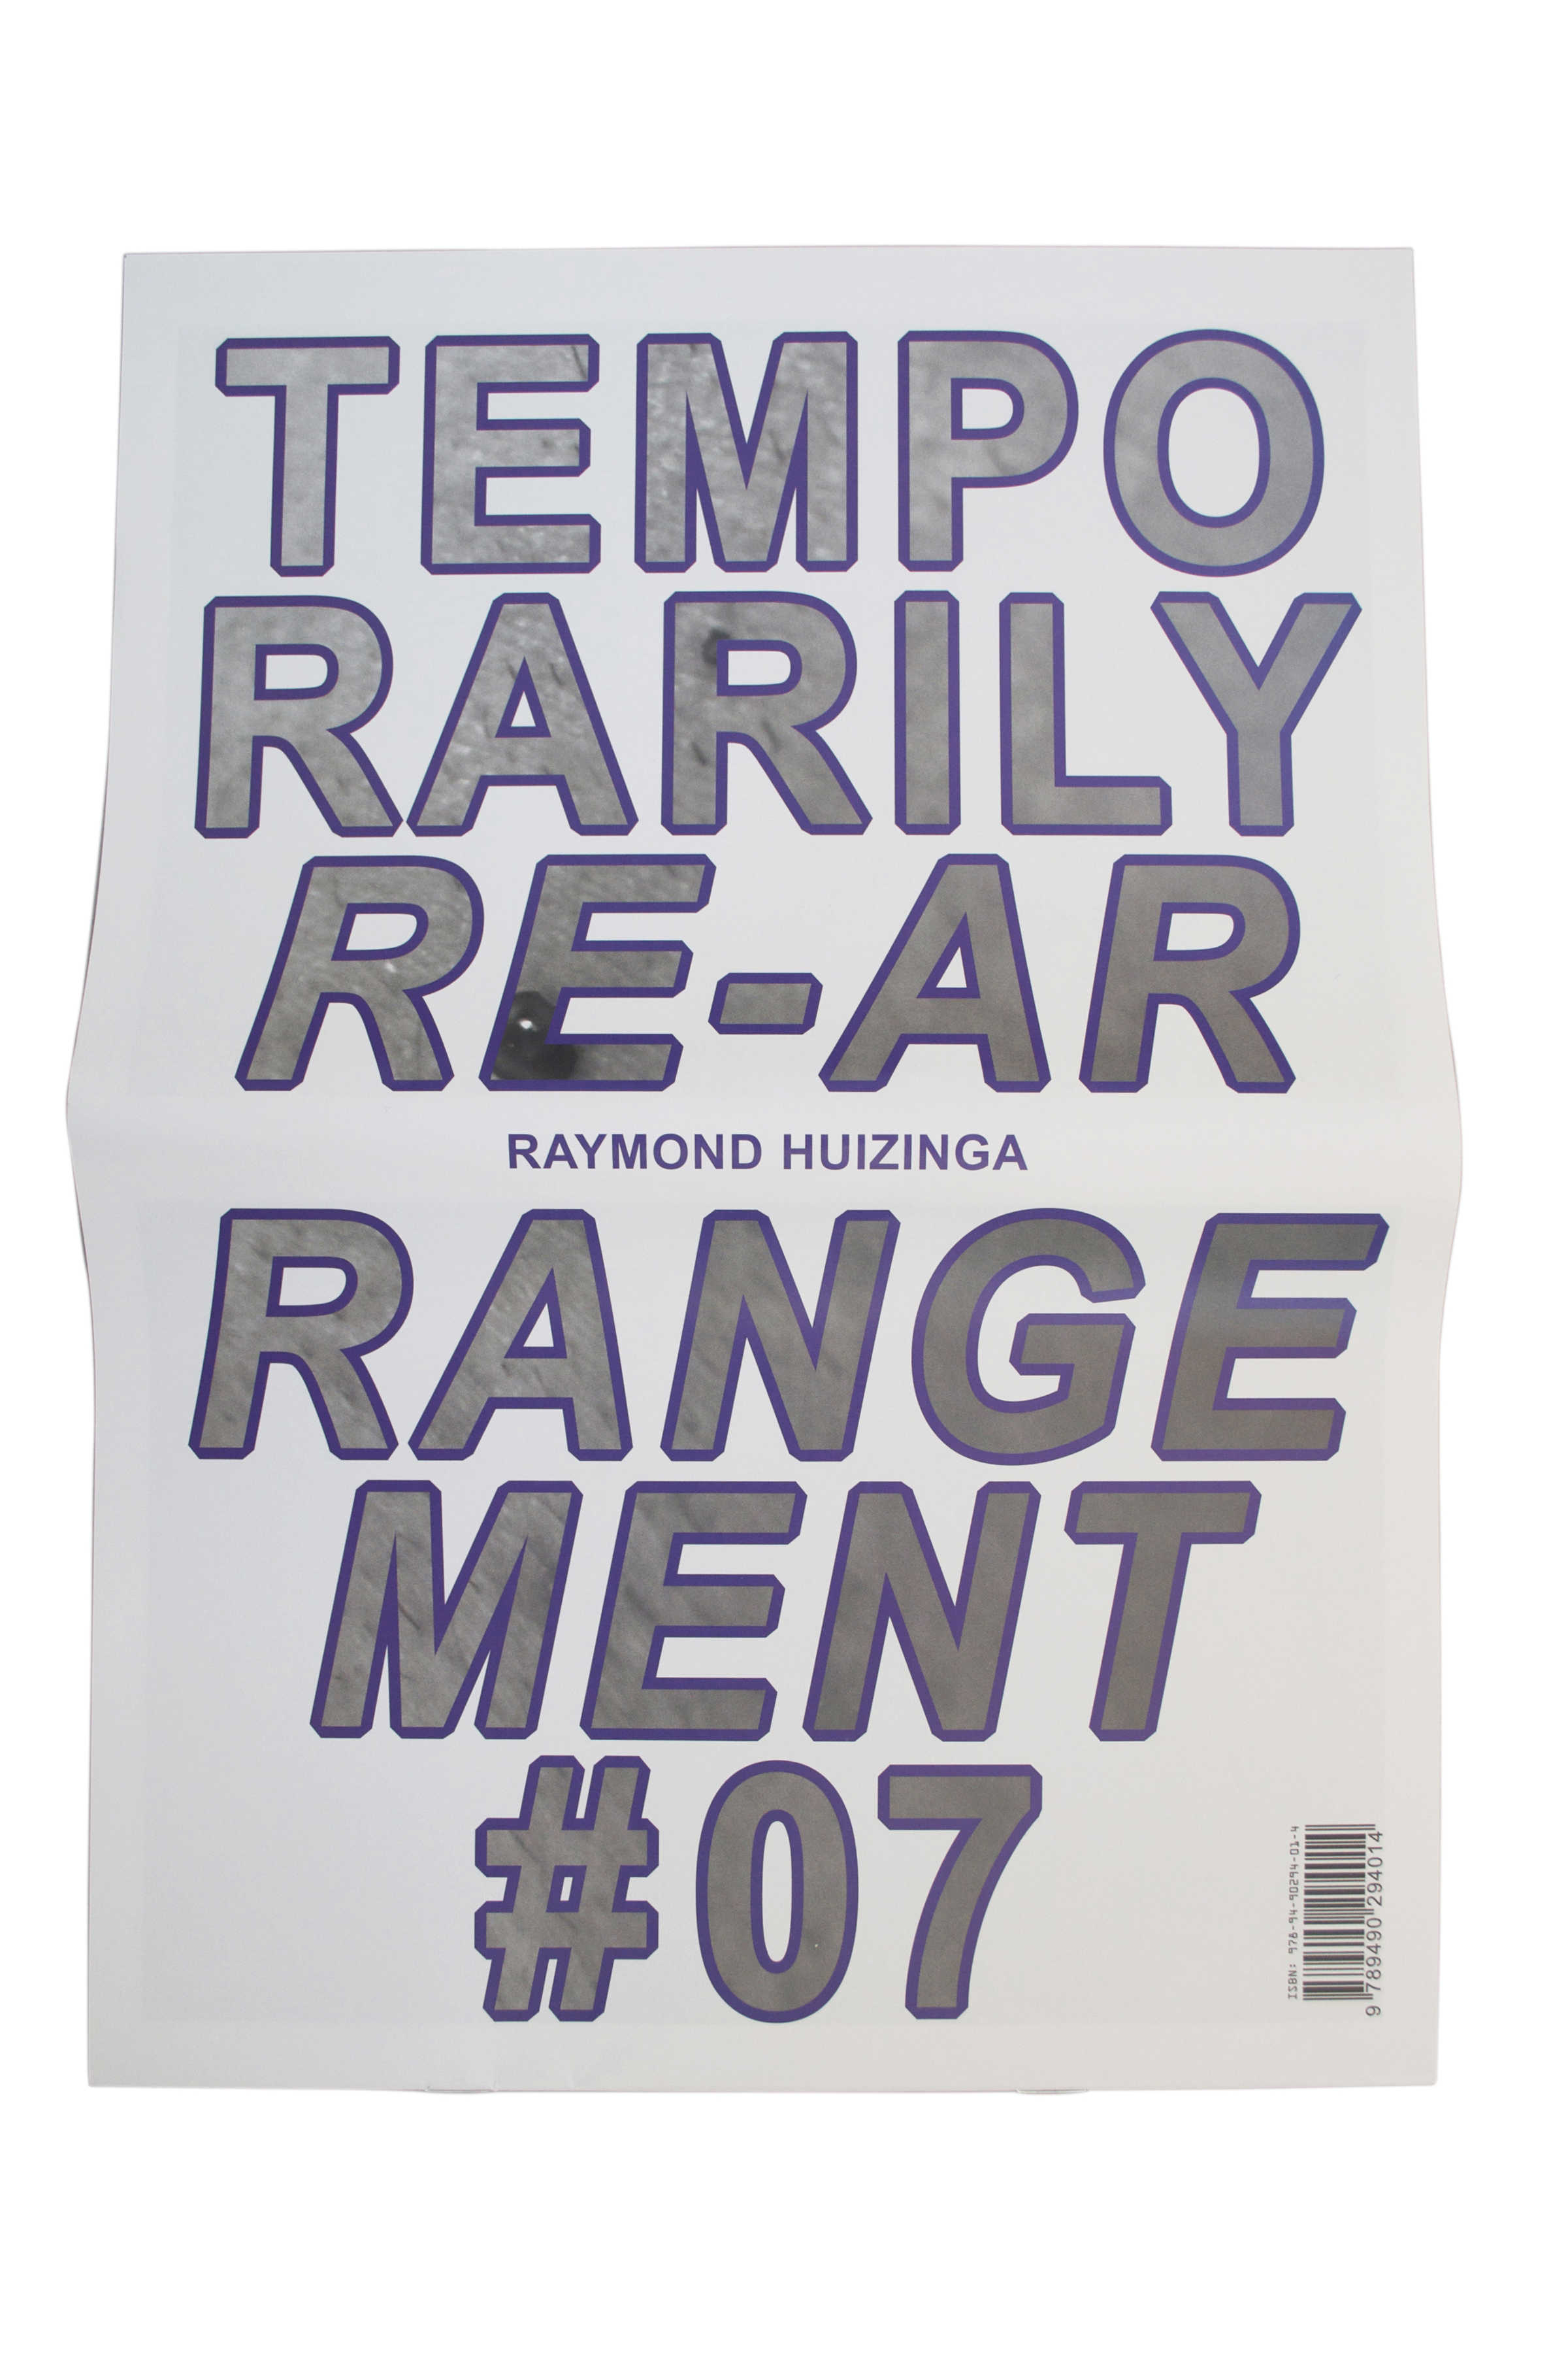 raymond huizinga [cover]